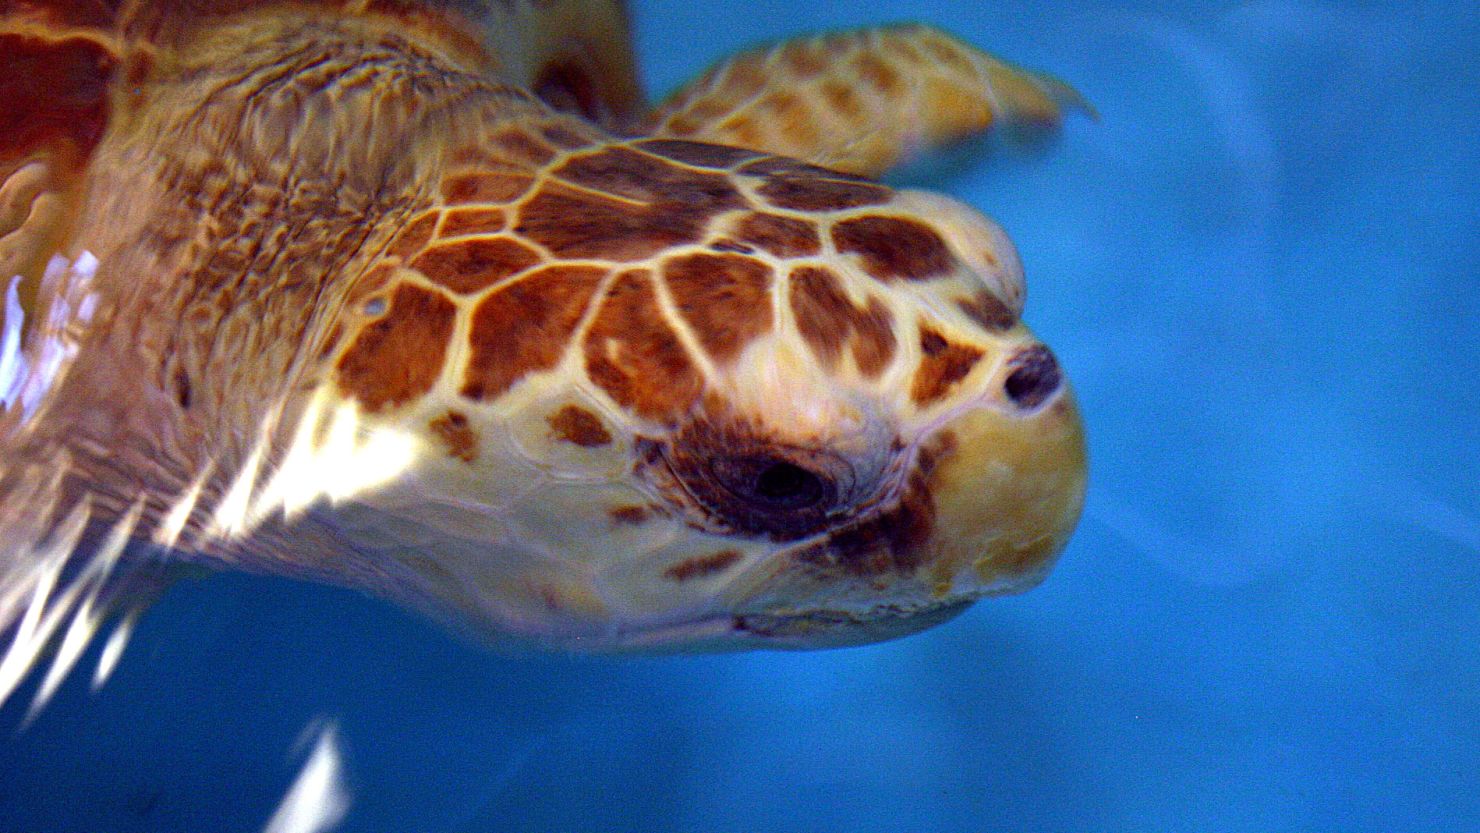 Caton the sea turtle has found a new home at Sea World Orlando.